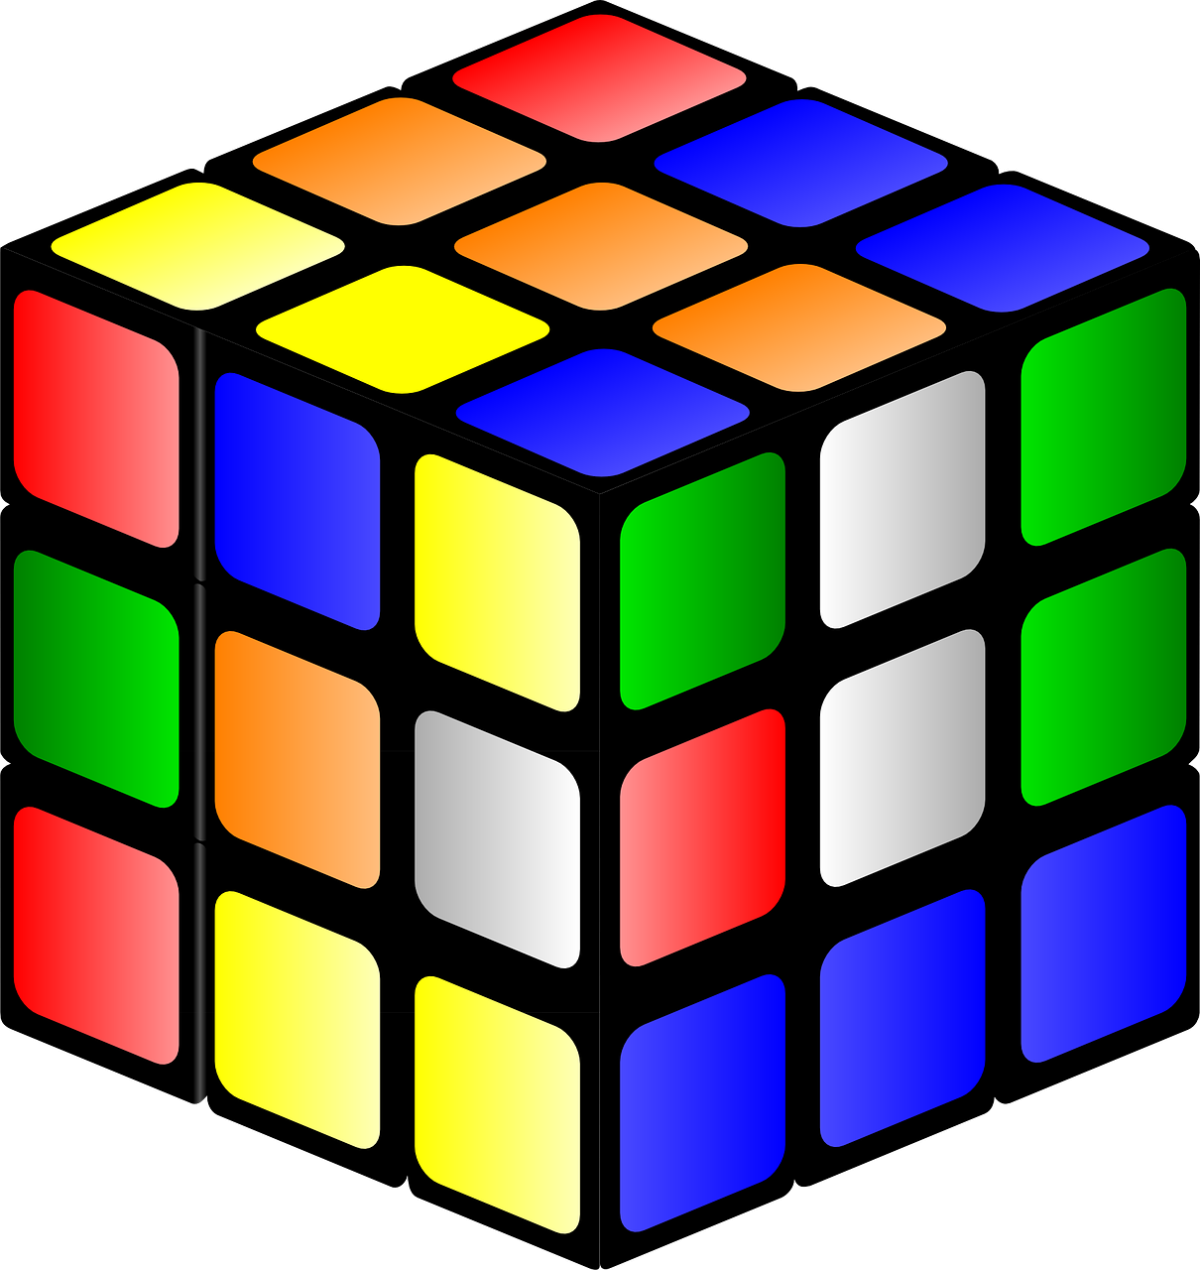 Покажи картинку кубики. Кубик Рубика. Кубик Рубика рисунок. Кубик Рубика нарисованный. Кубики рубики.